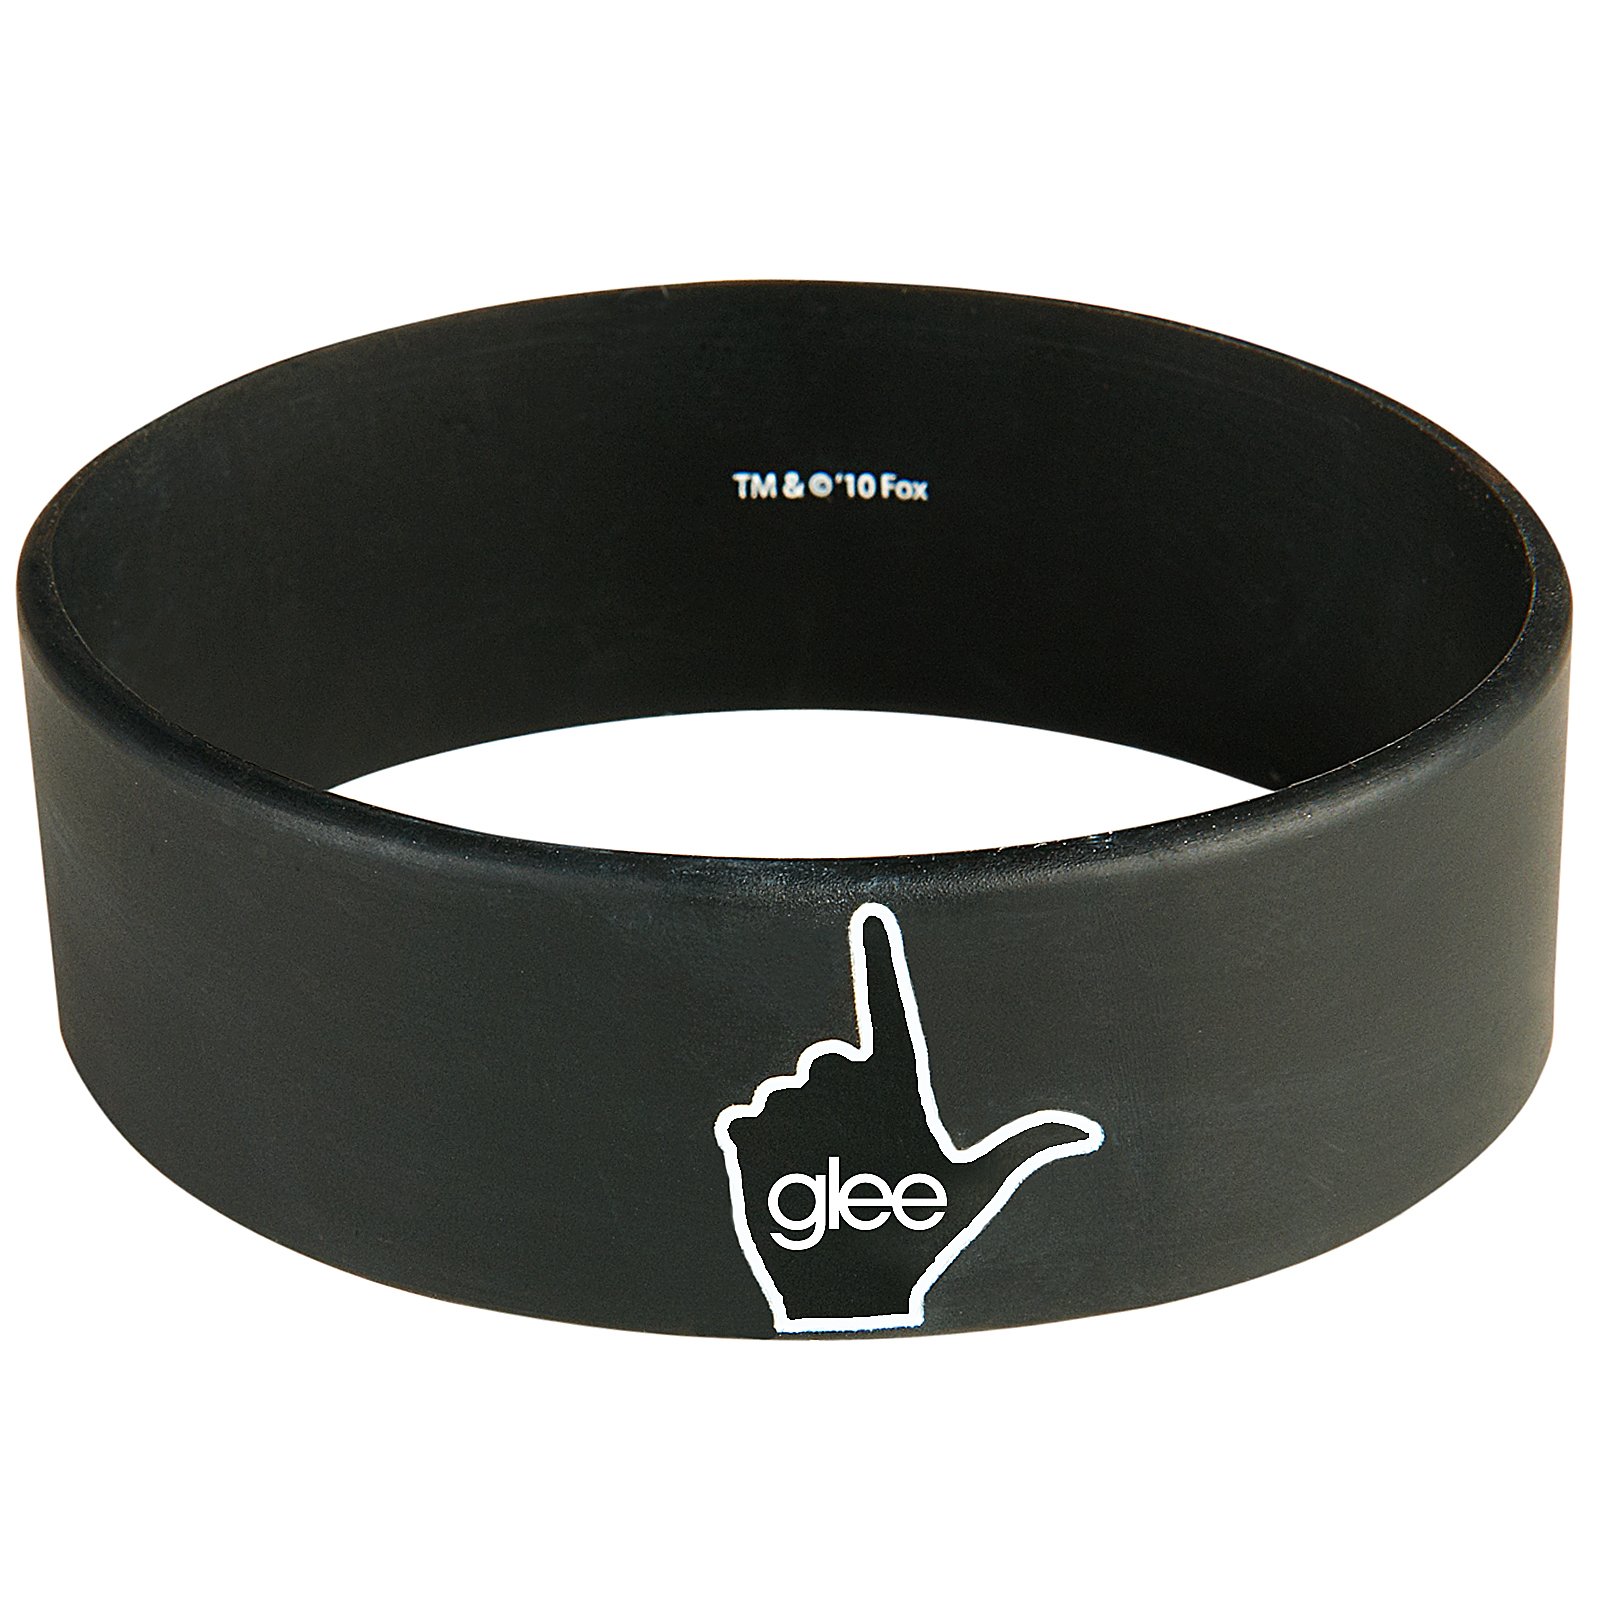 Glee Rubber Bracelet (1 count)